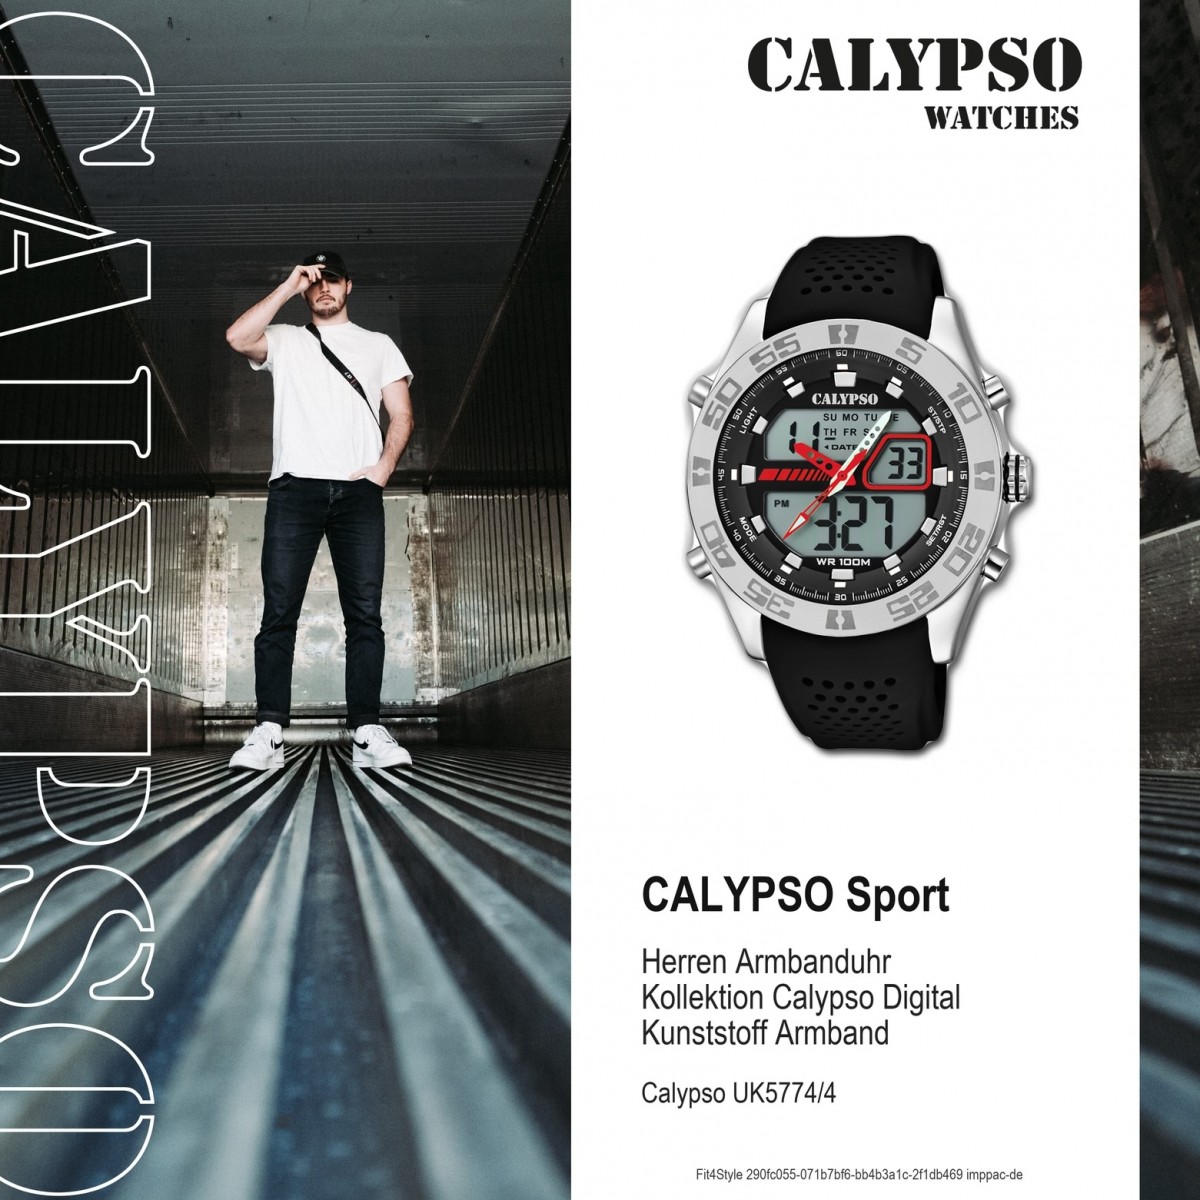 PU Herren Street K5774/4 Calypso UK5774/4 Style Quarz-Uhr schwarz Armbanduhr